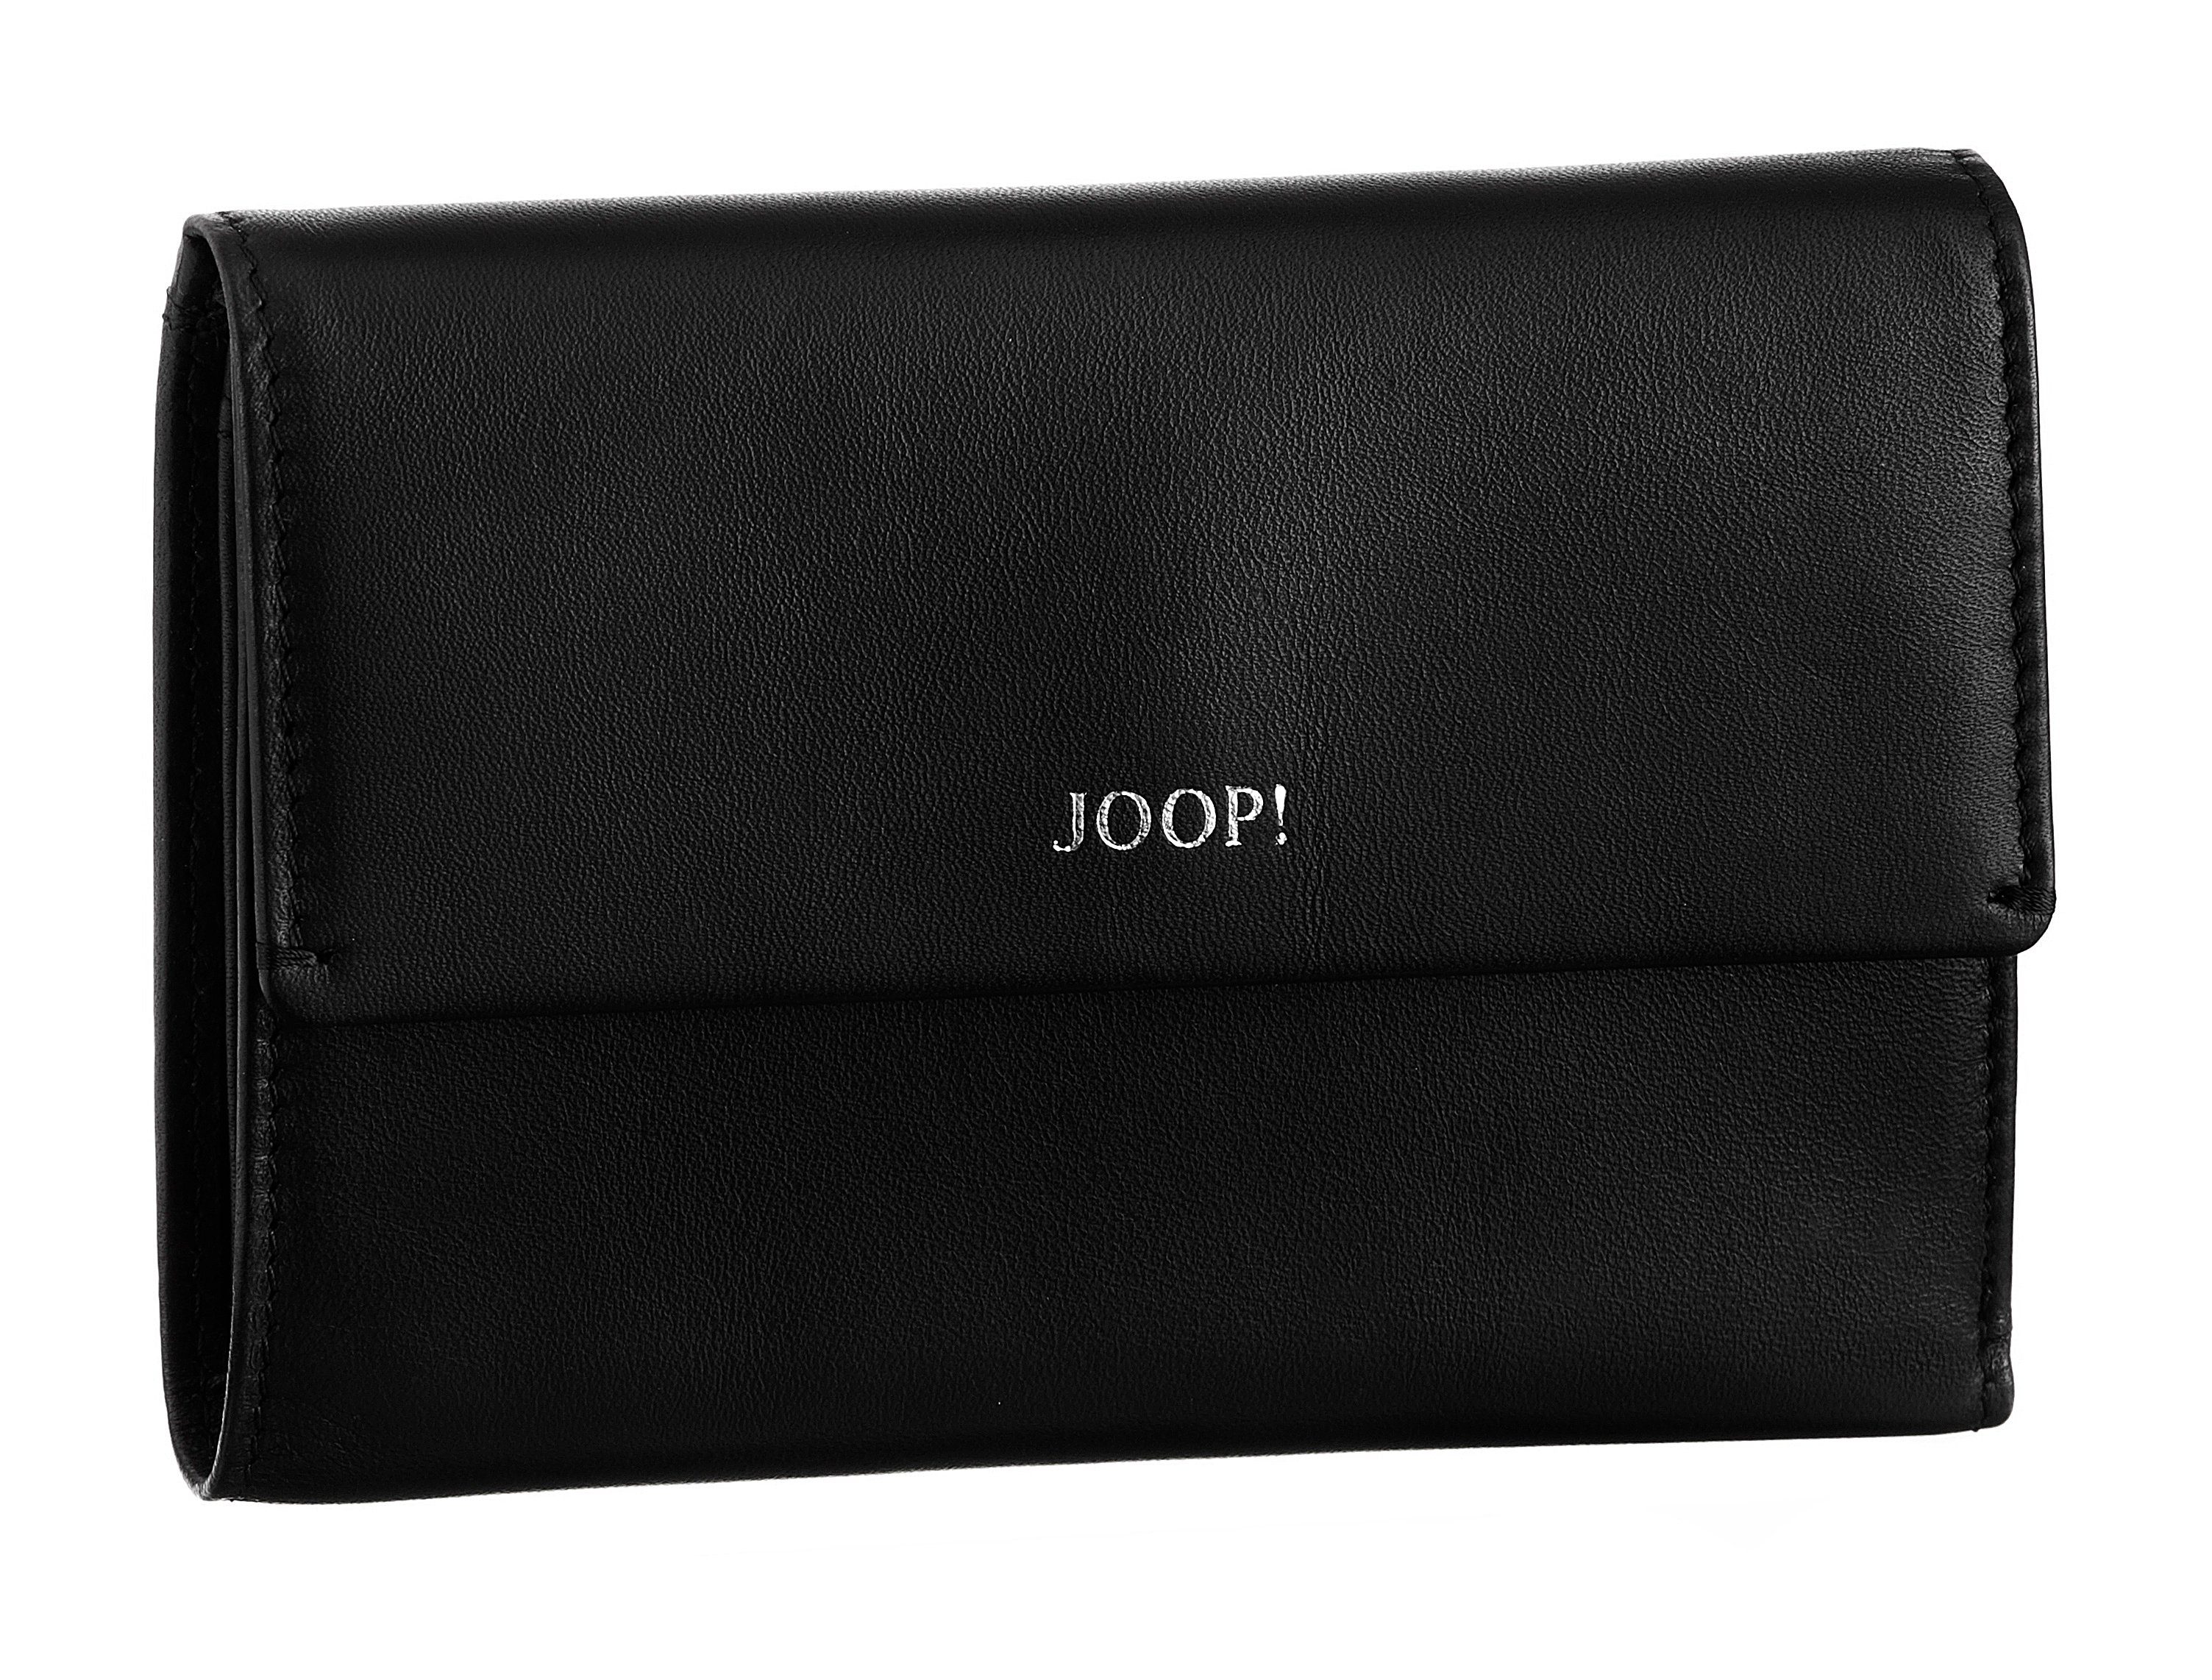 Joop! Geldbörse sofisticato 1.0 cosma purse mh10f, in schlichtem Design black